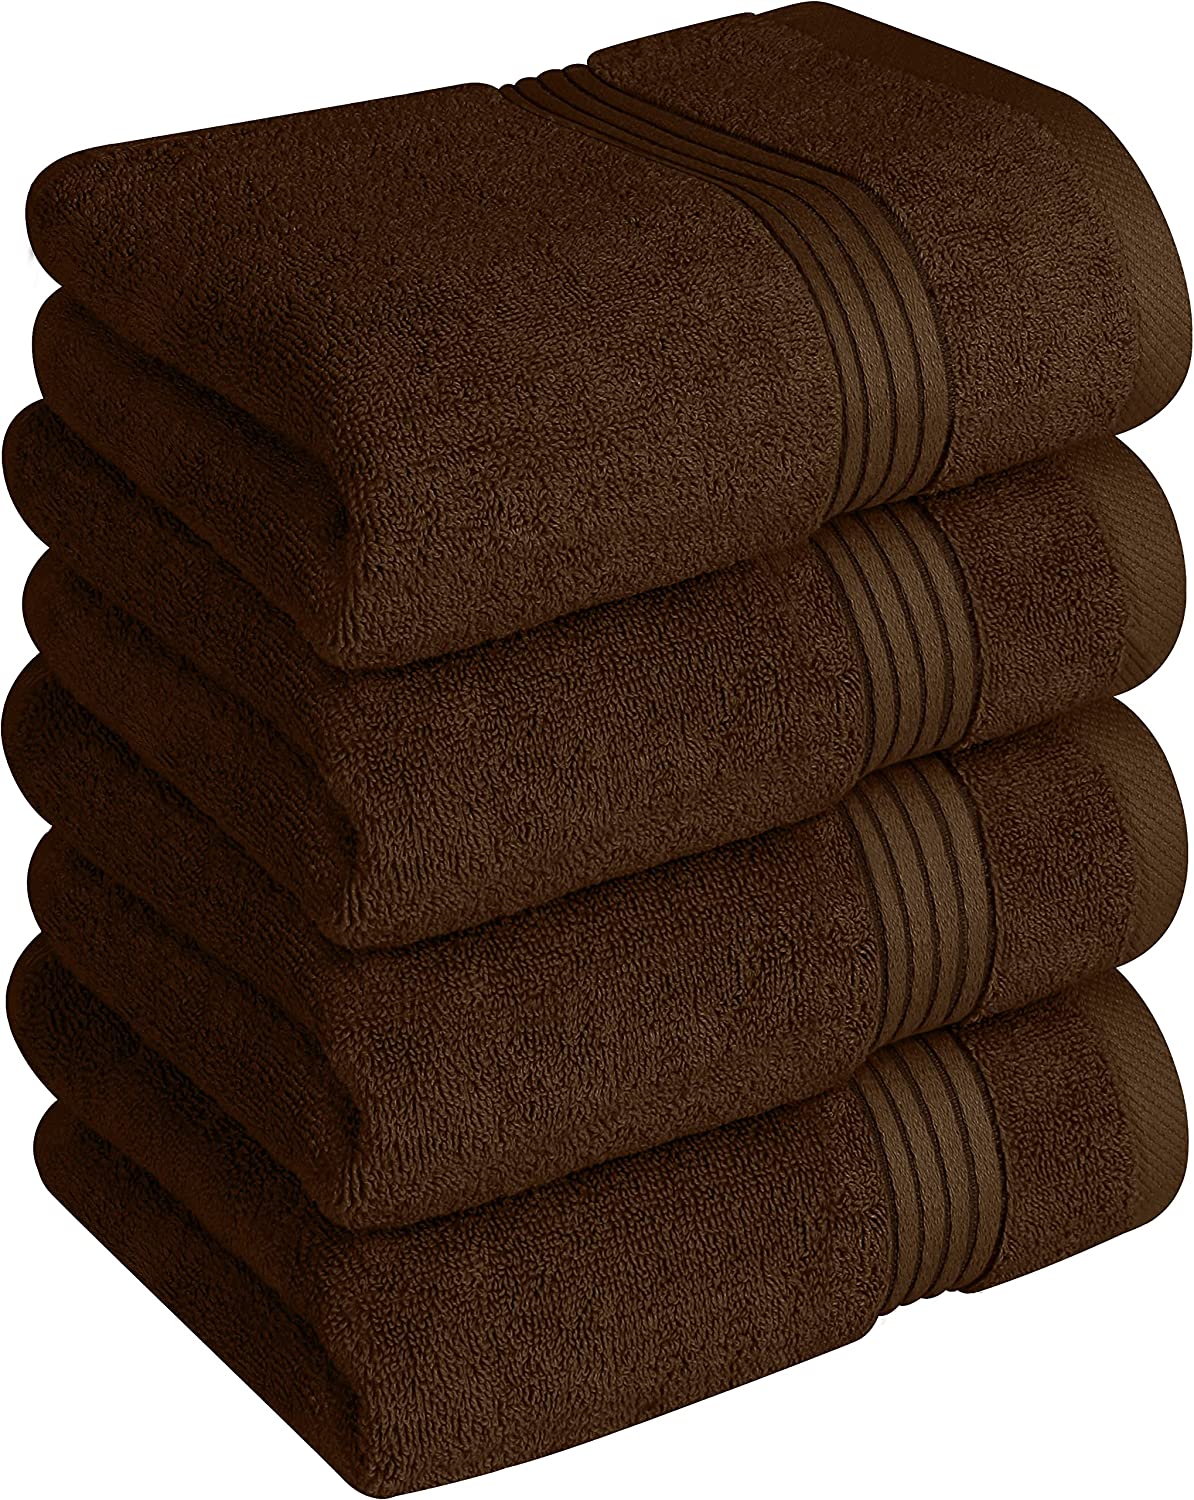 Utopia Towels - Bath Towels Set, Grey - Premium 600 GSM 100% Ring Spun  Cotton - Quick Dry